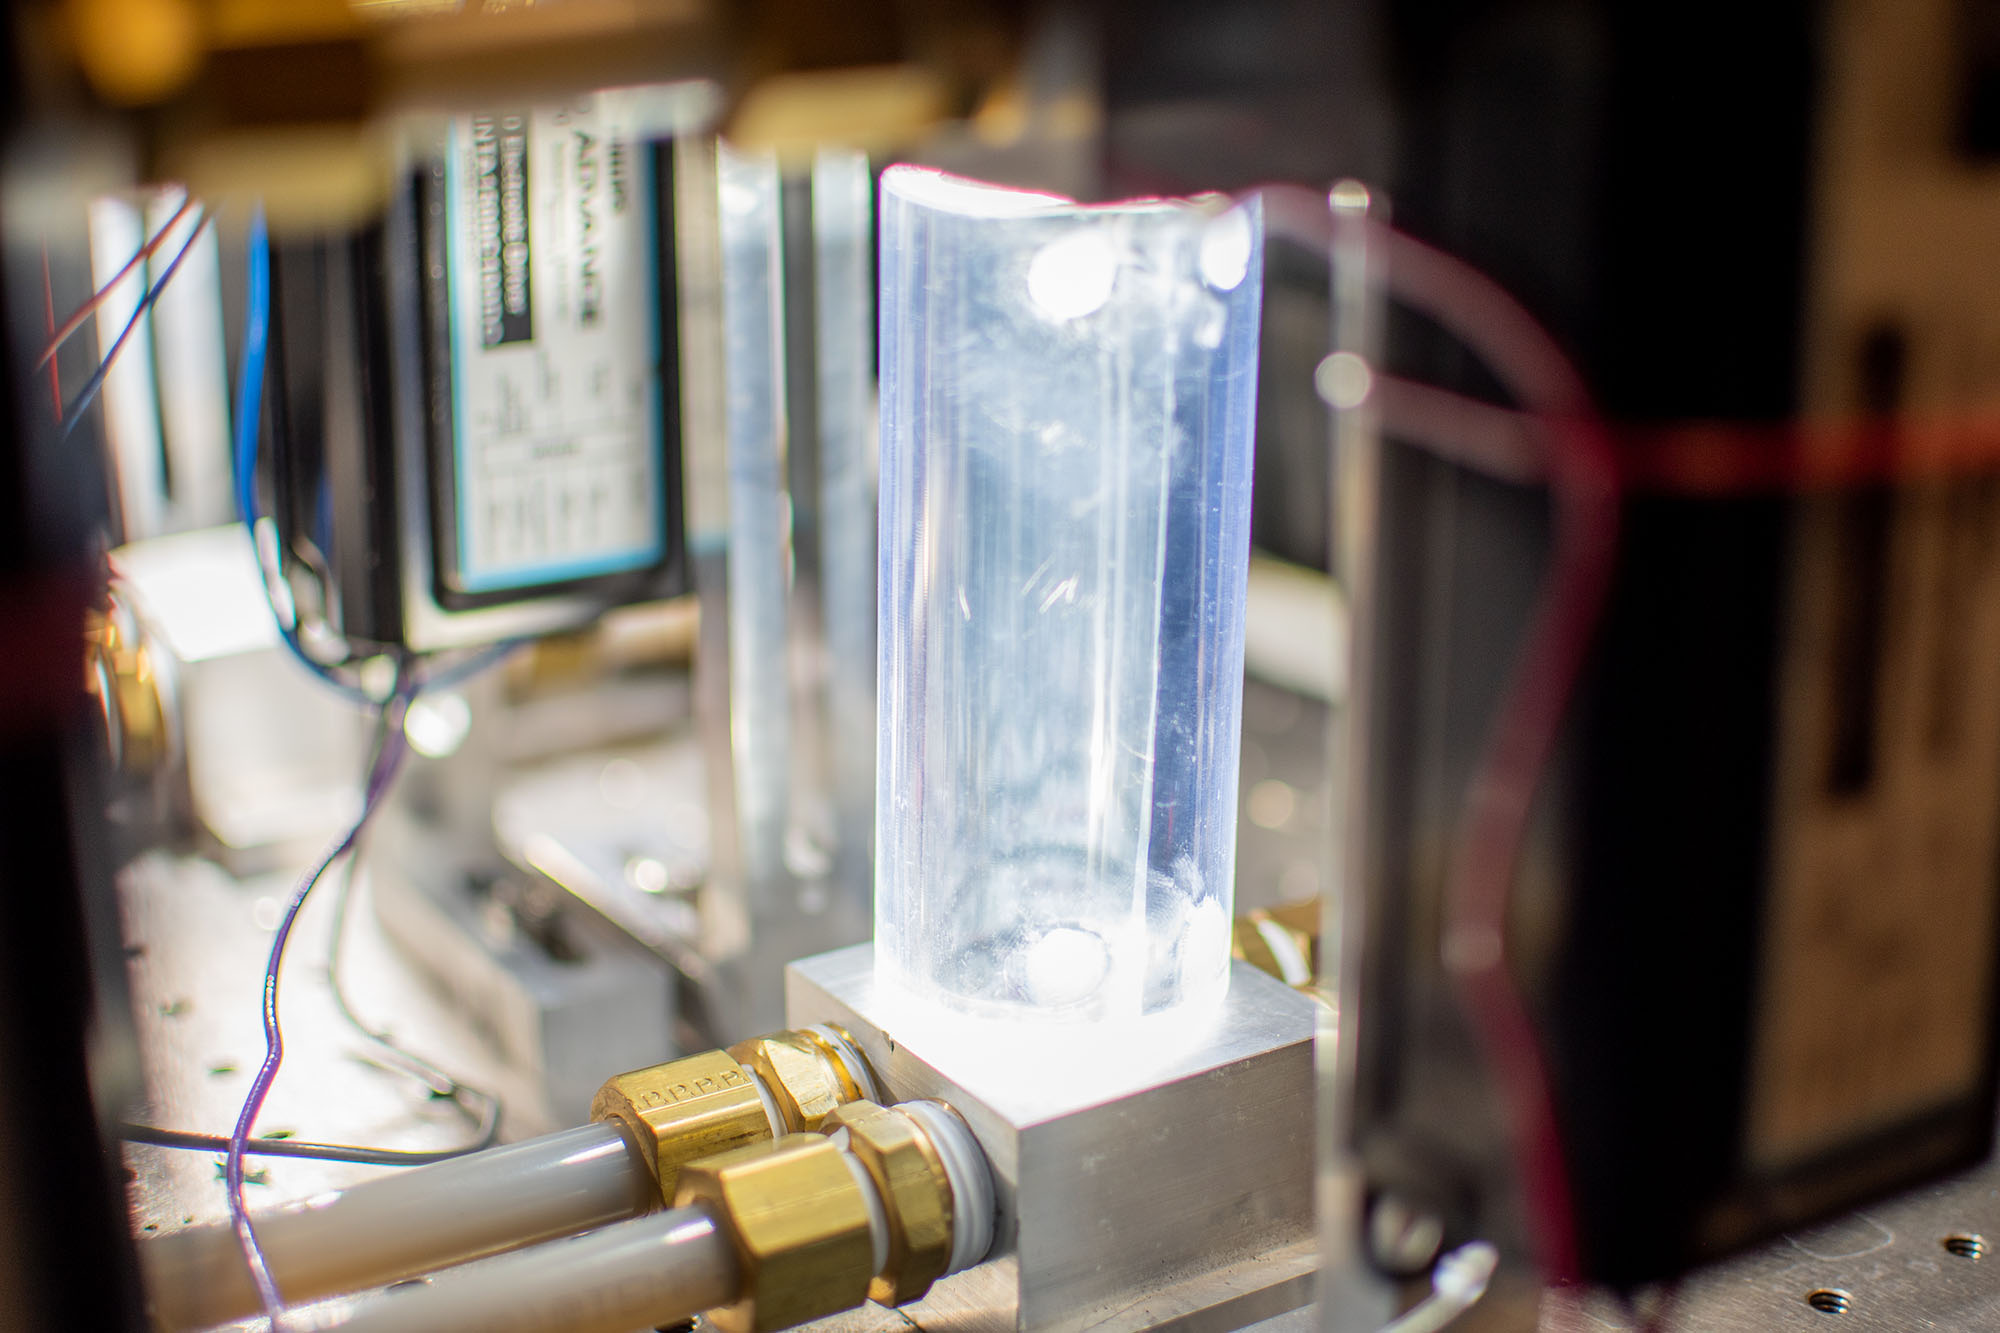 Solar Cell subjected to intense white light